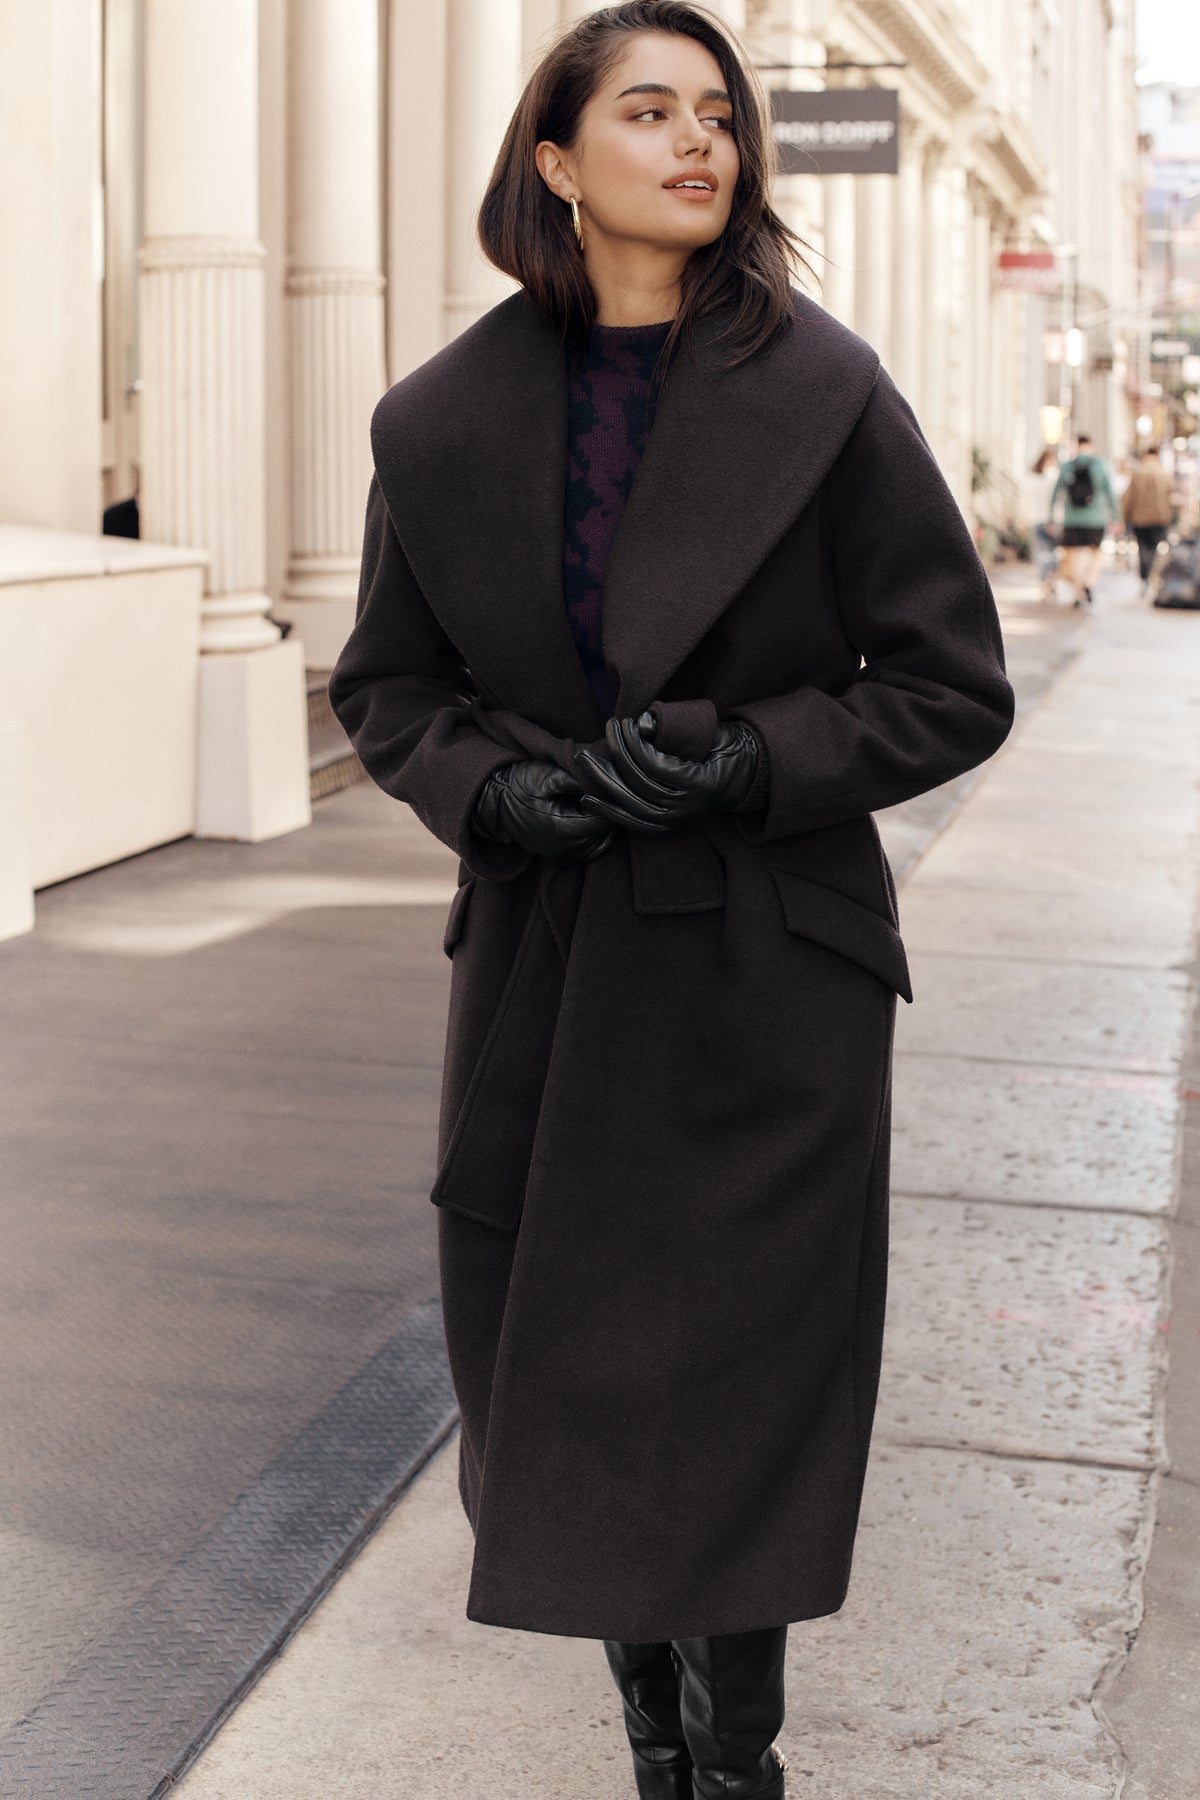 Model walks down city sidewalk wearing tall black boots, leather gloves, 